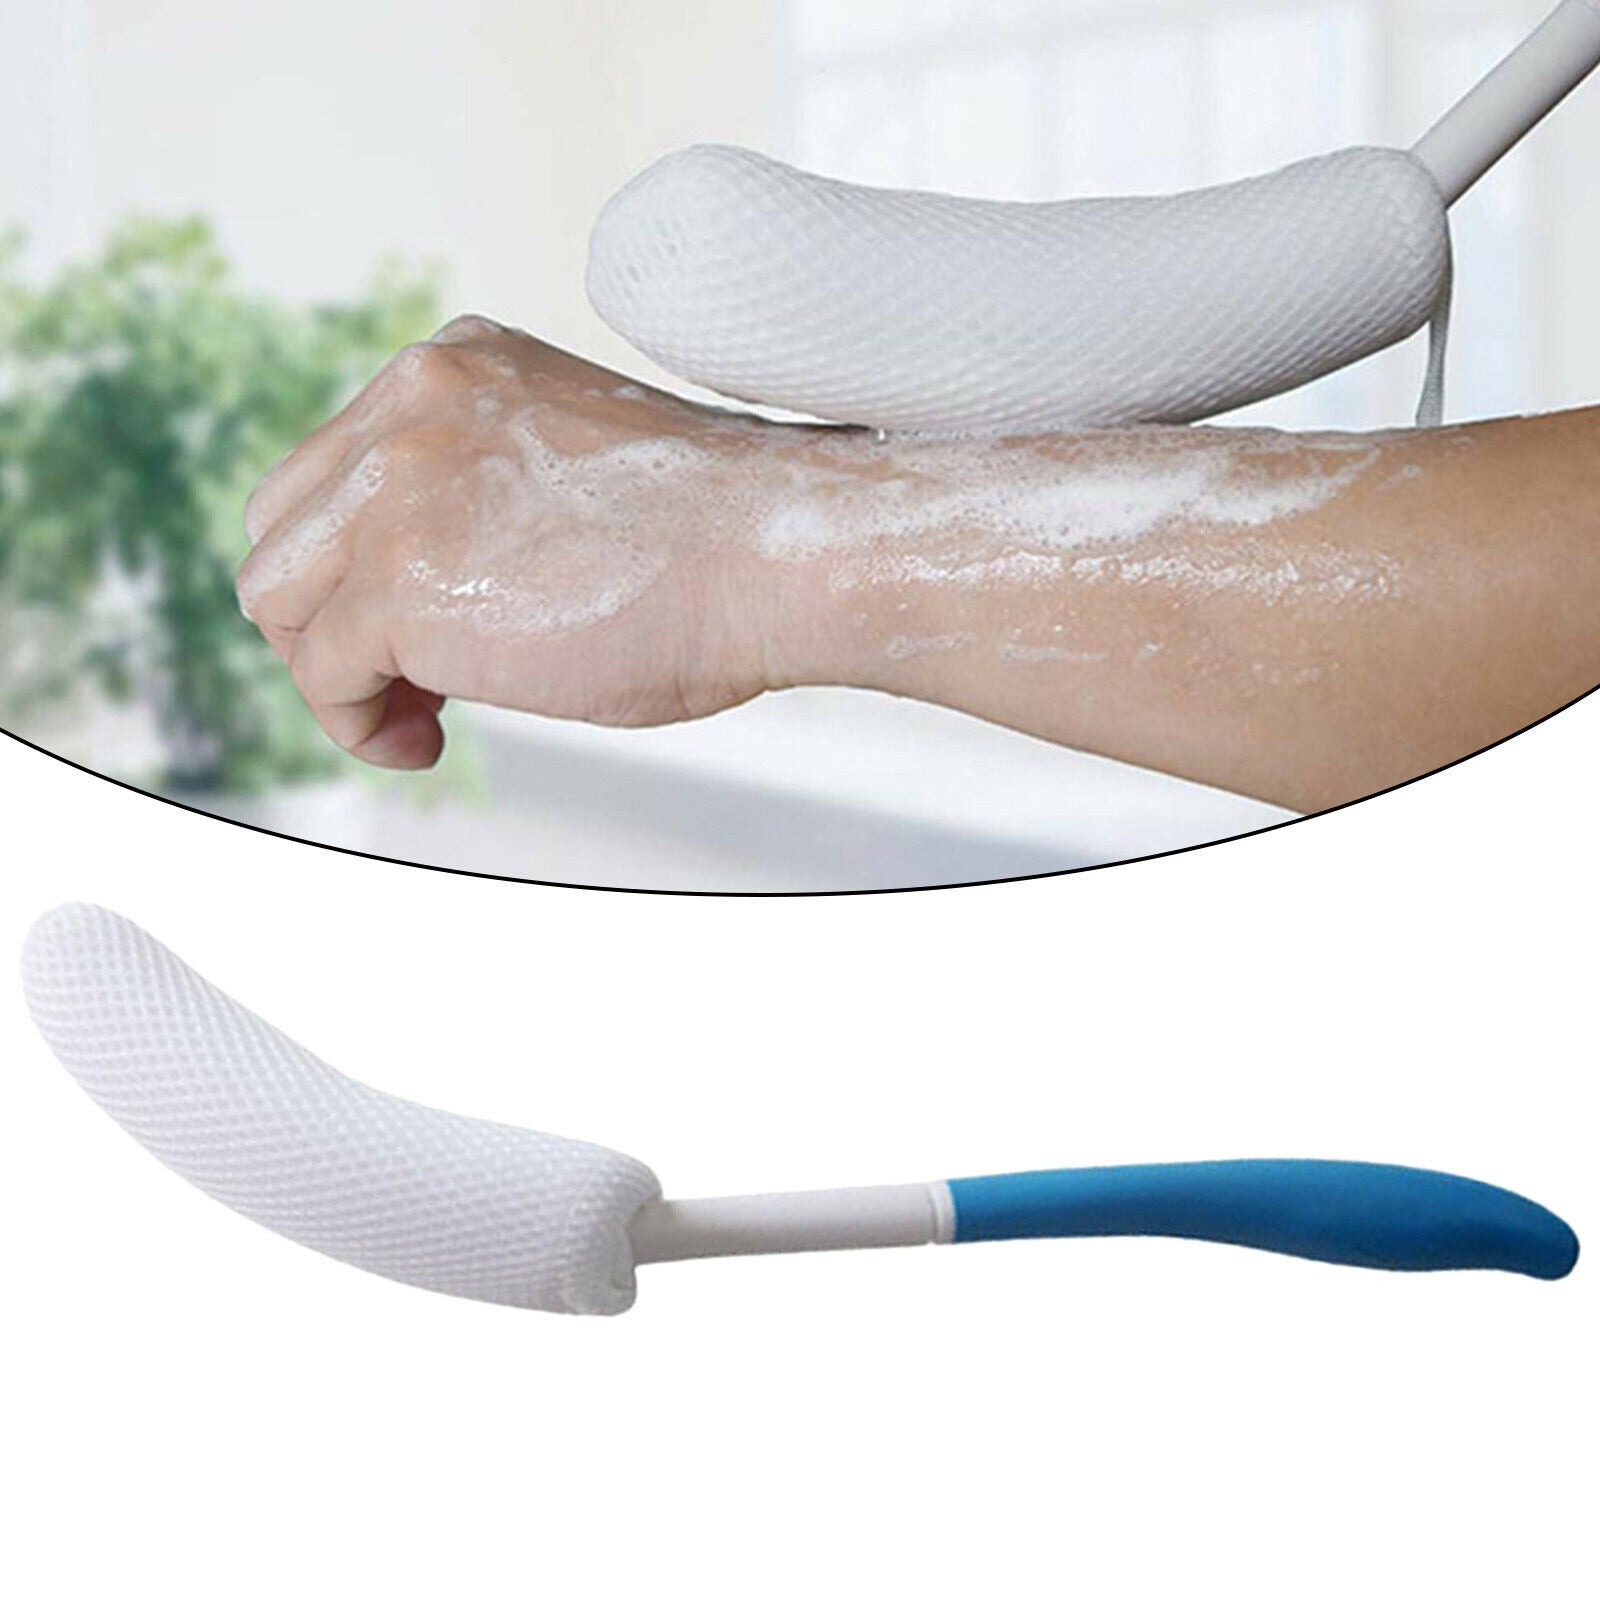 Back Bath Brush for Elderly Lotion Applicators Anti-Slip Handle Improve Skin's